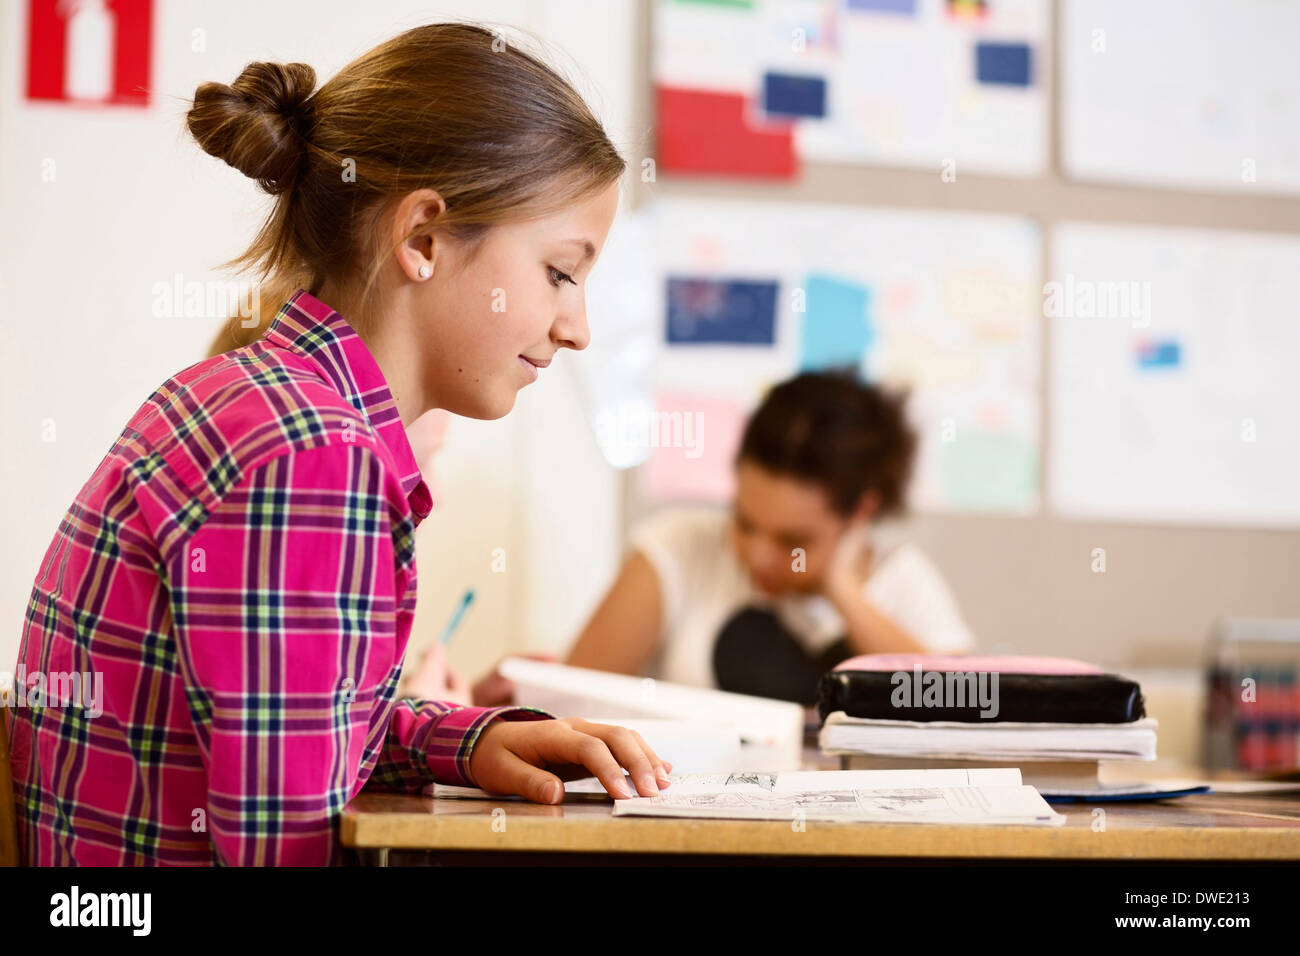 Schoolgirl studying at desk in classroom Stock Photo